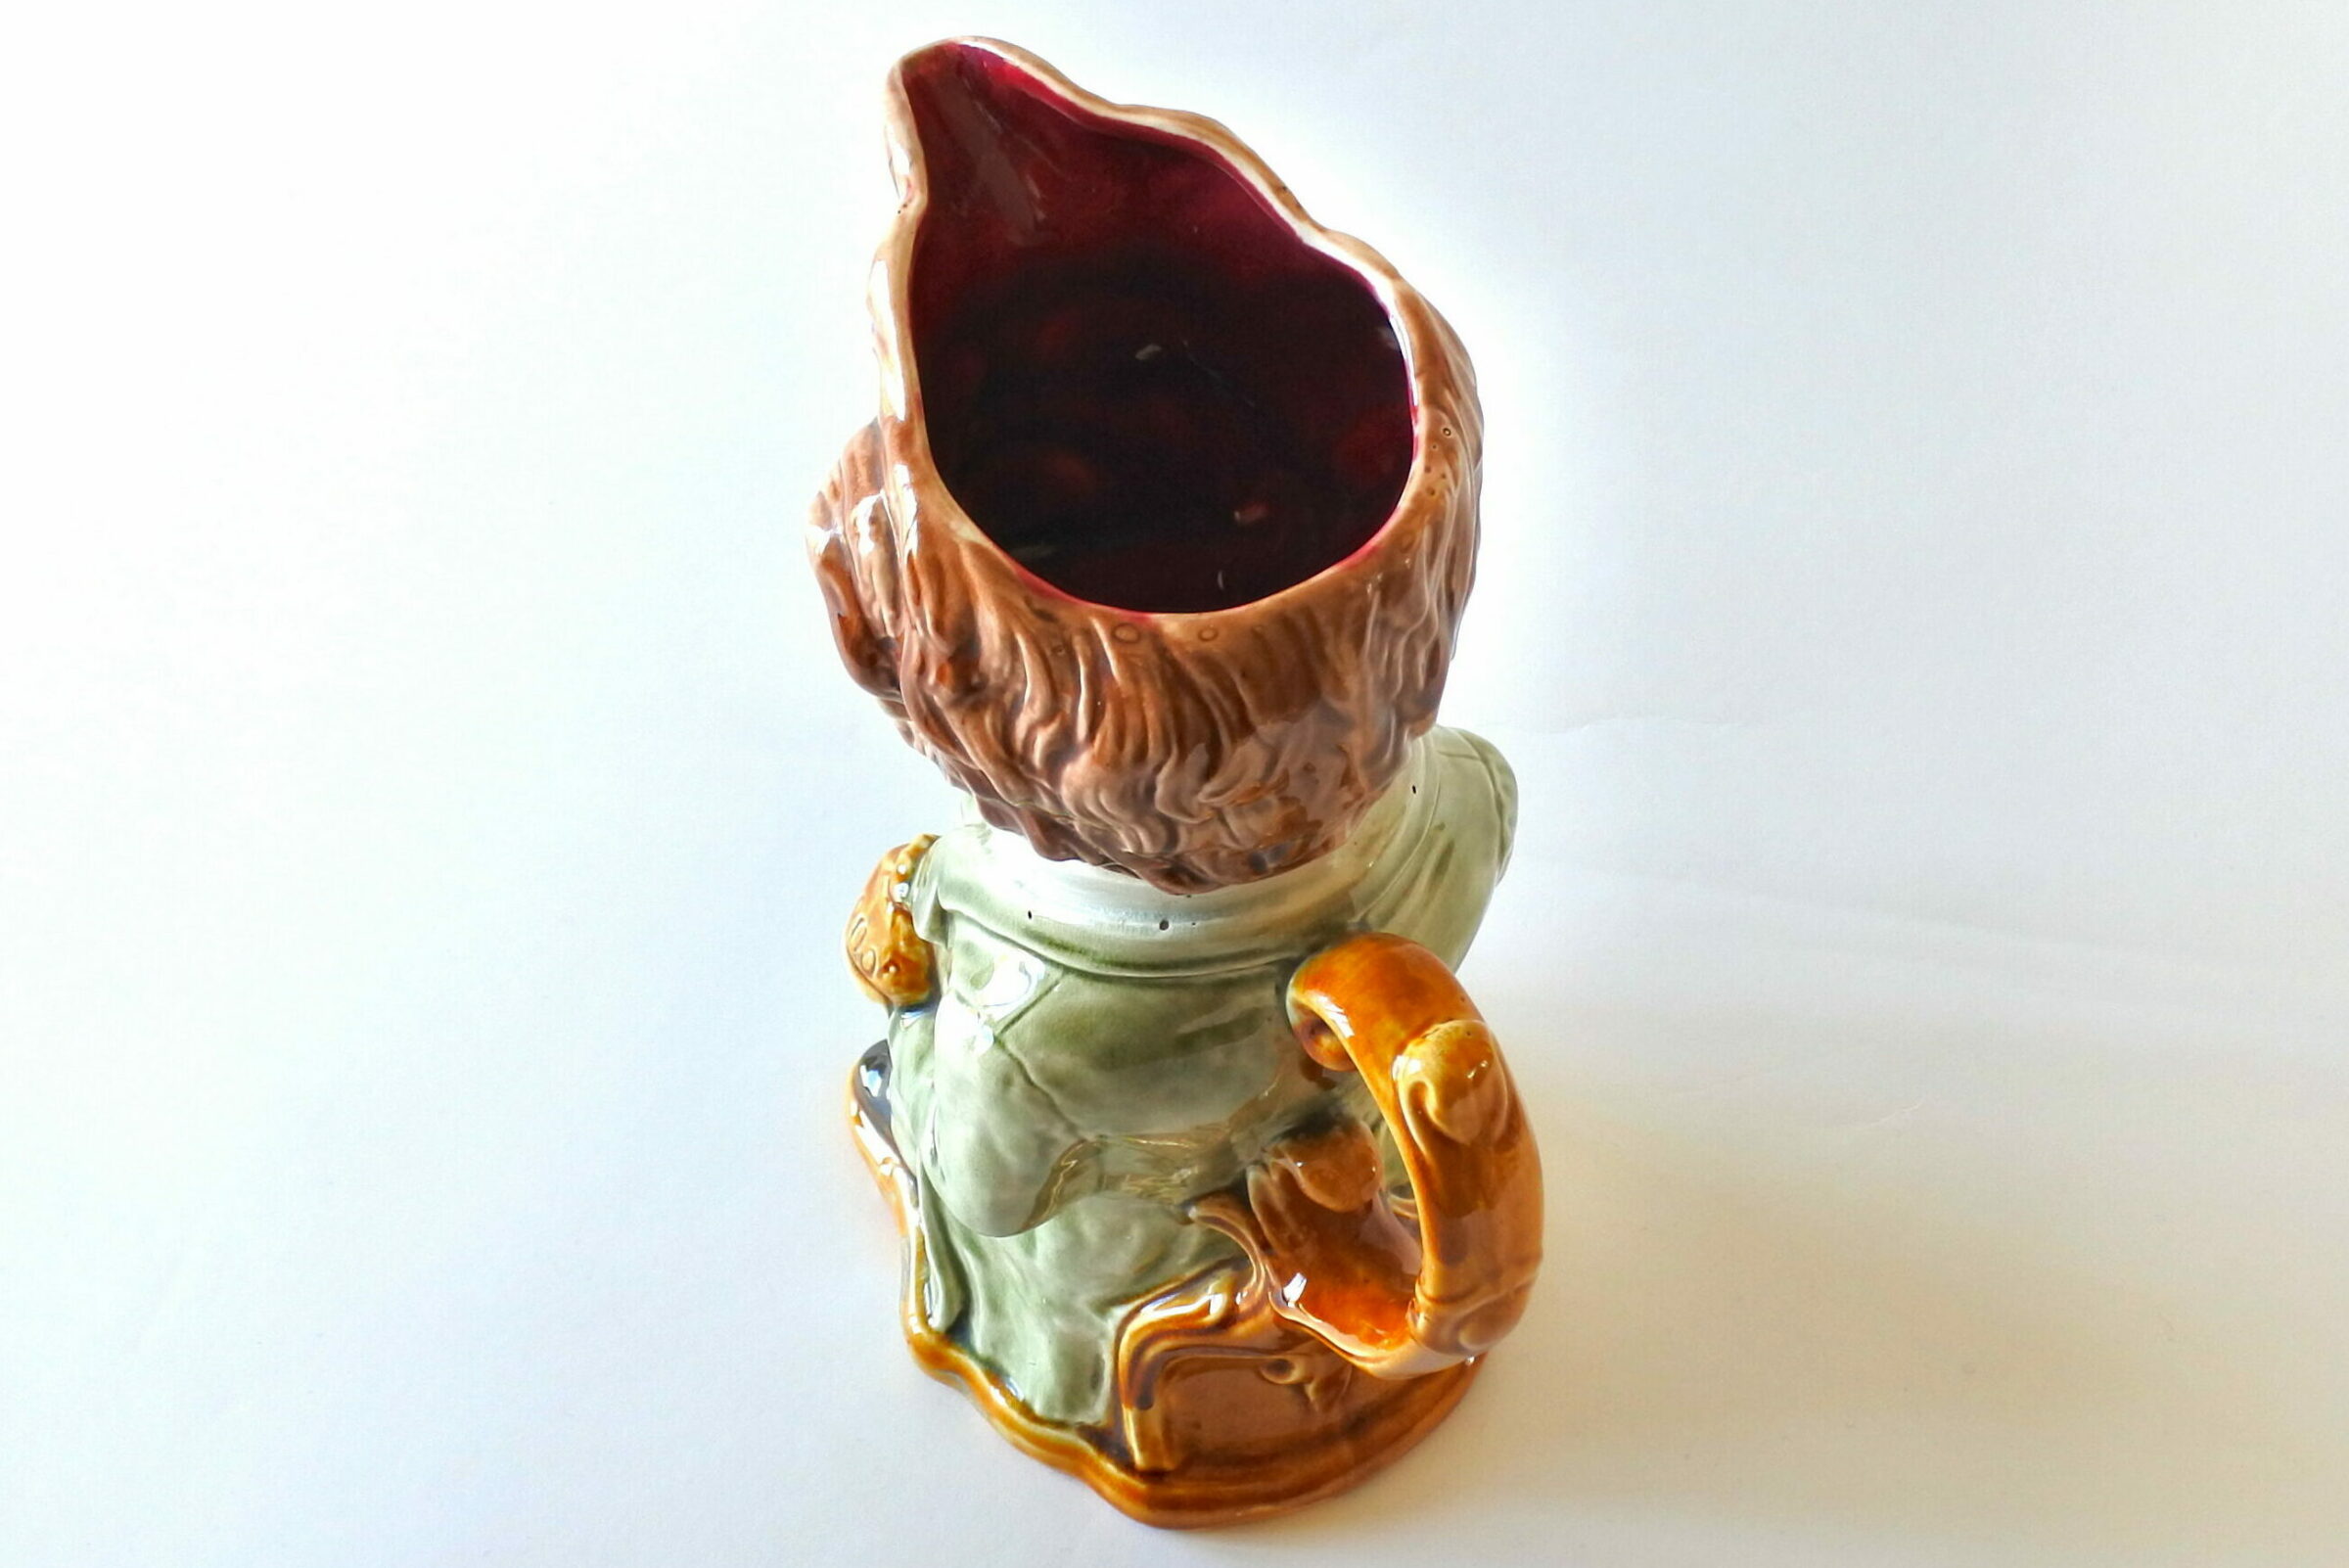 Brocca Onnaing in ceramica barbotine con parlamentare Camille Pelletan - 7